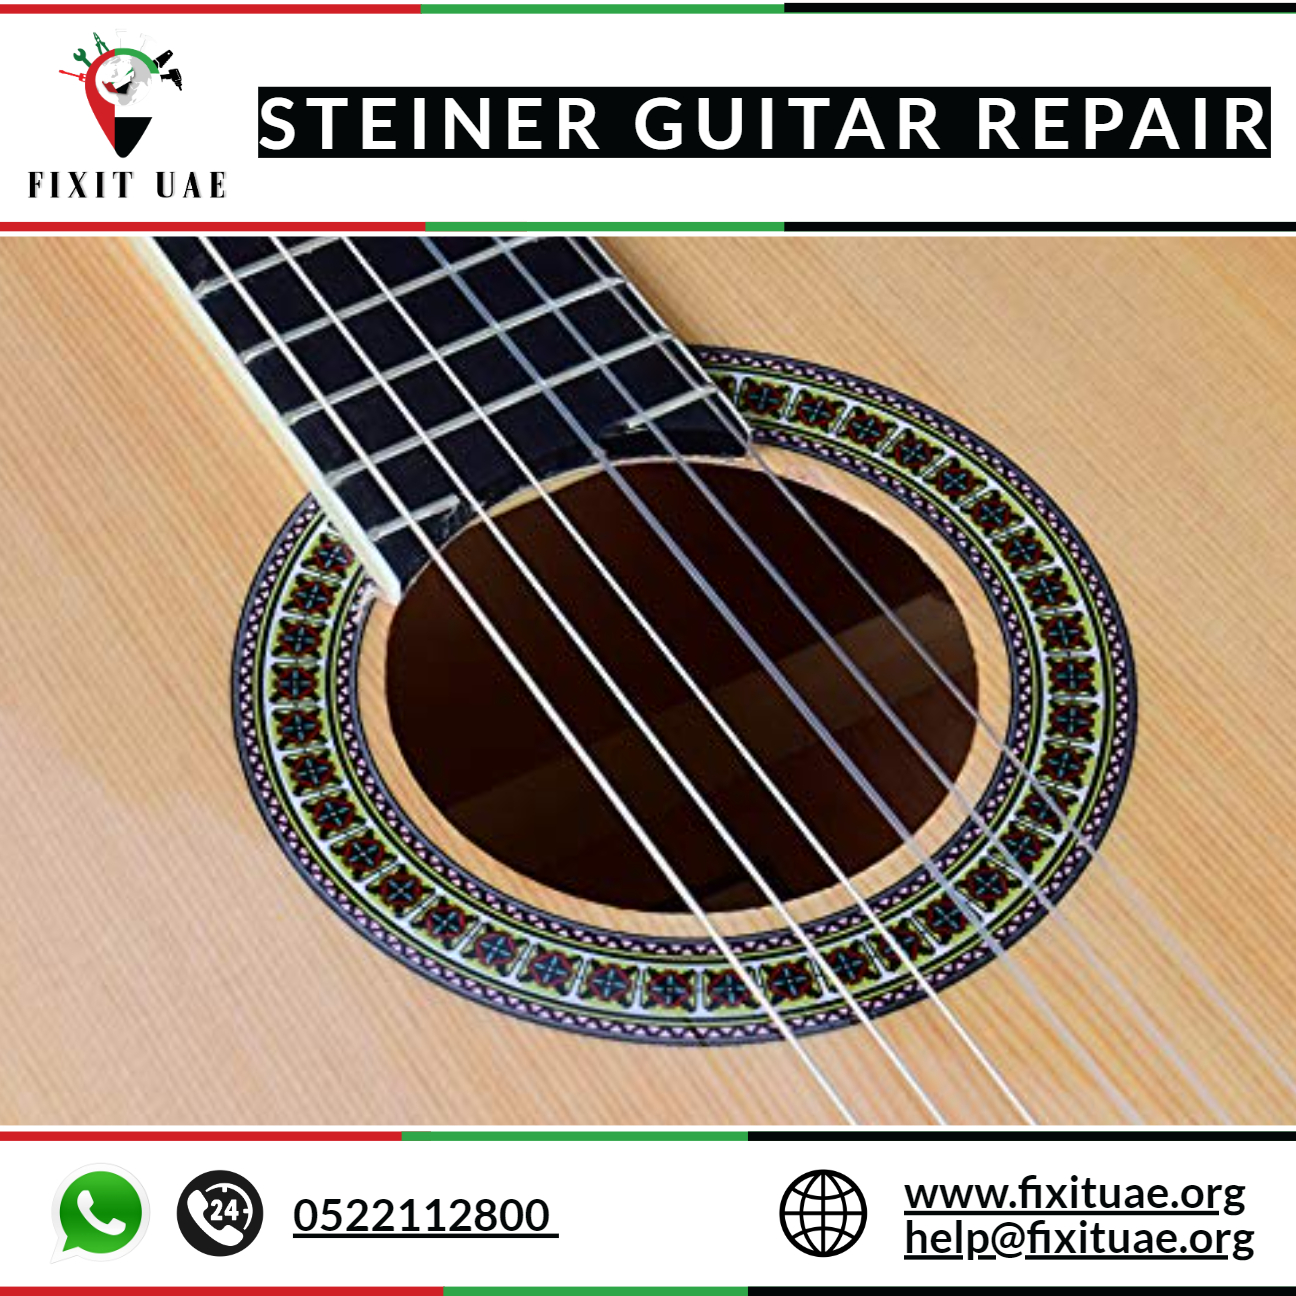 Steiner guitar repair